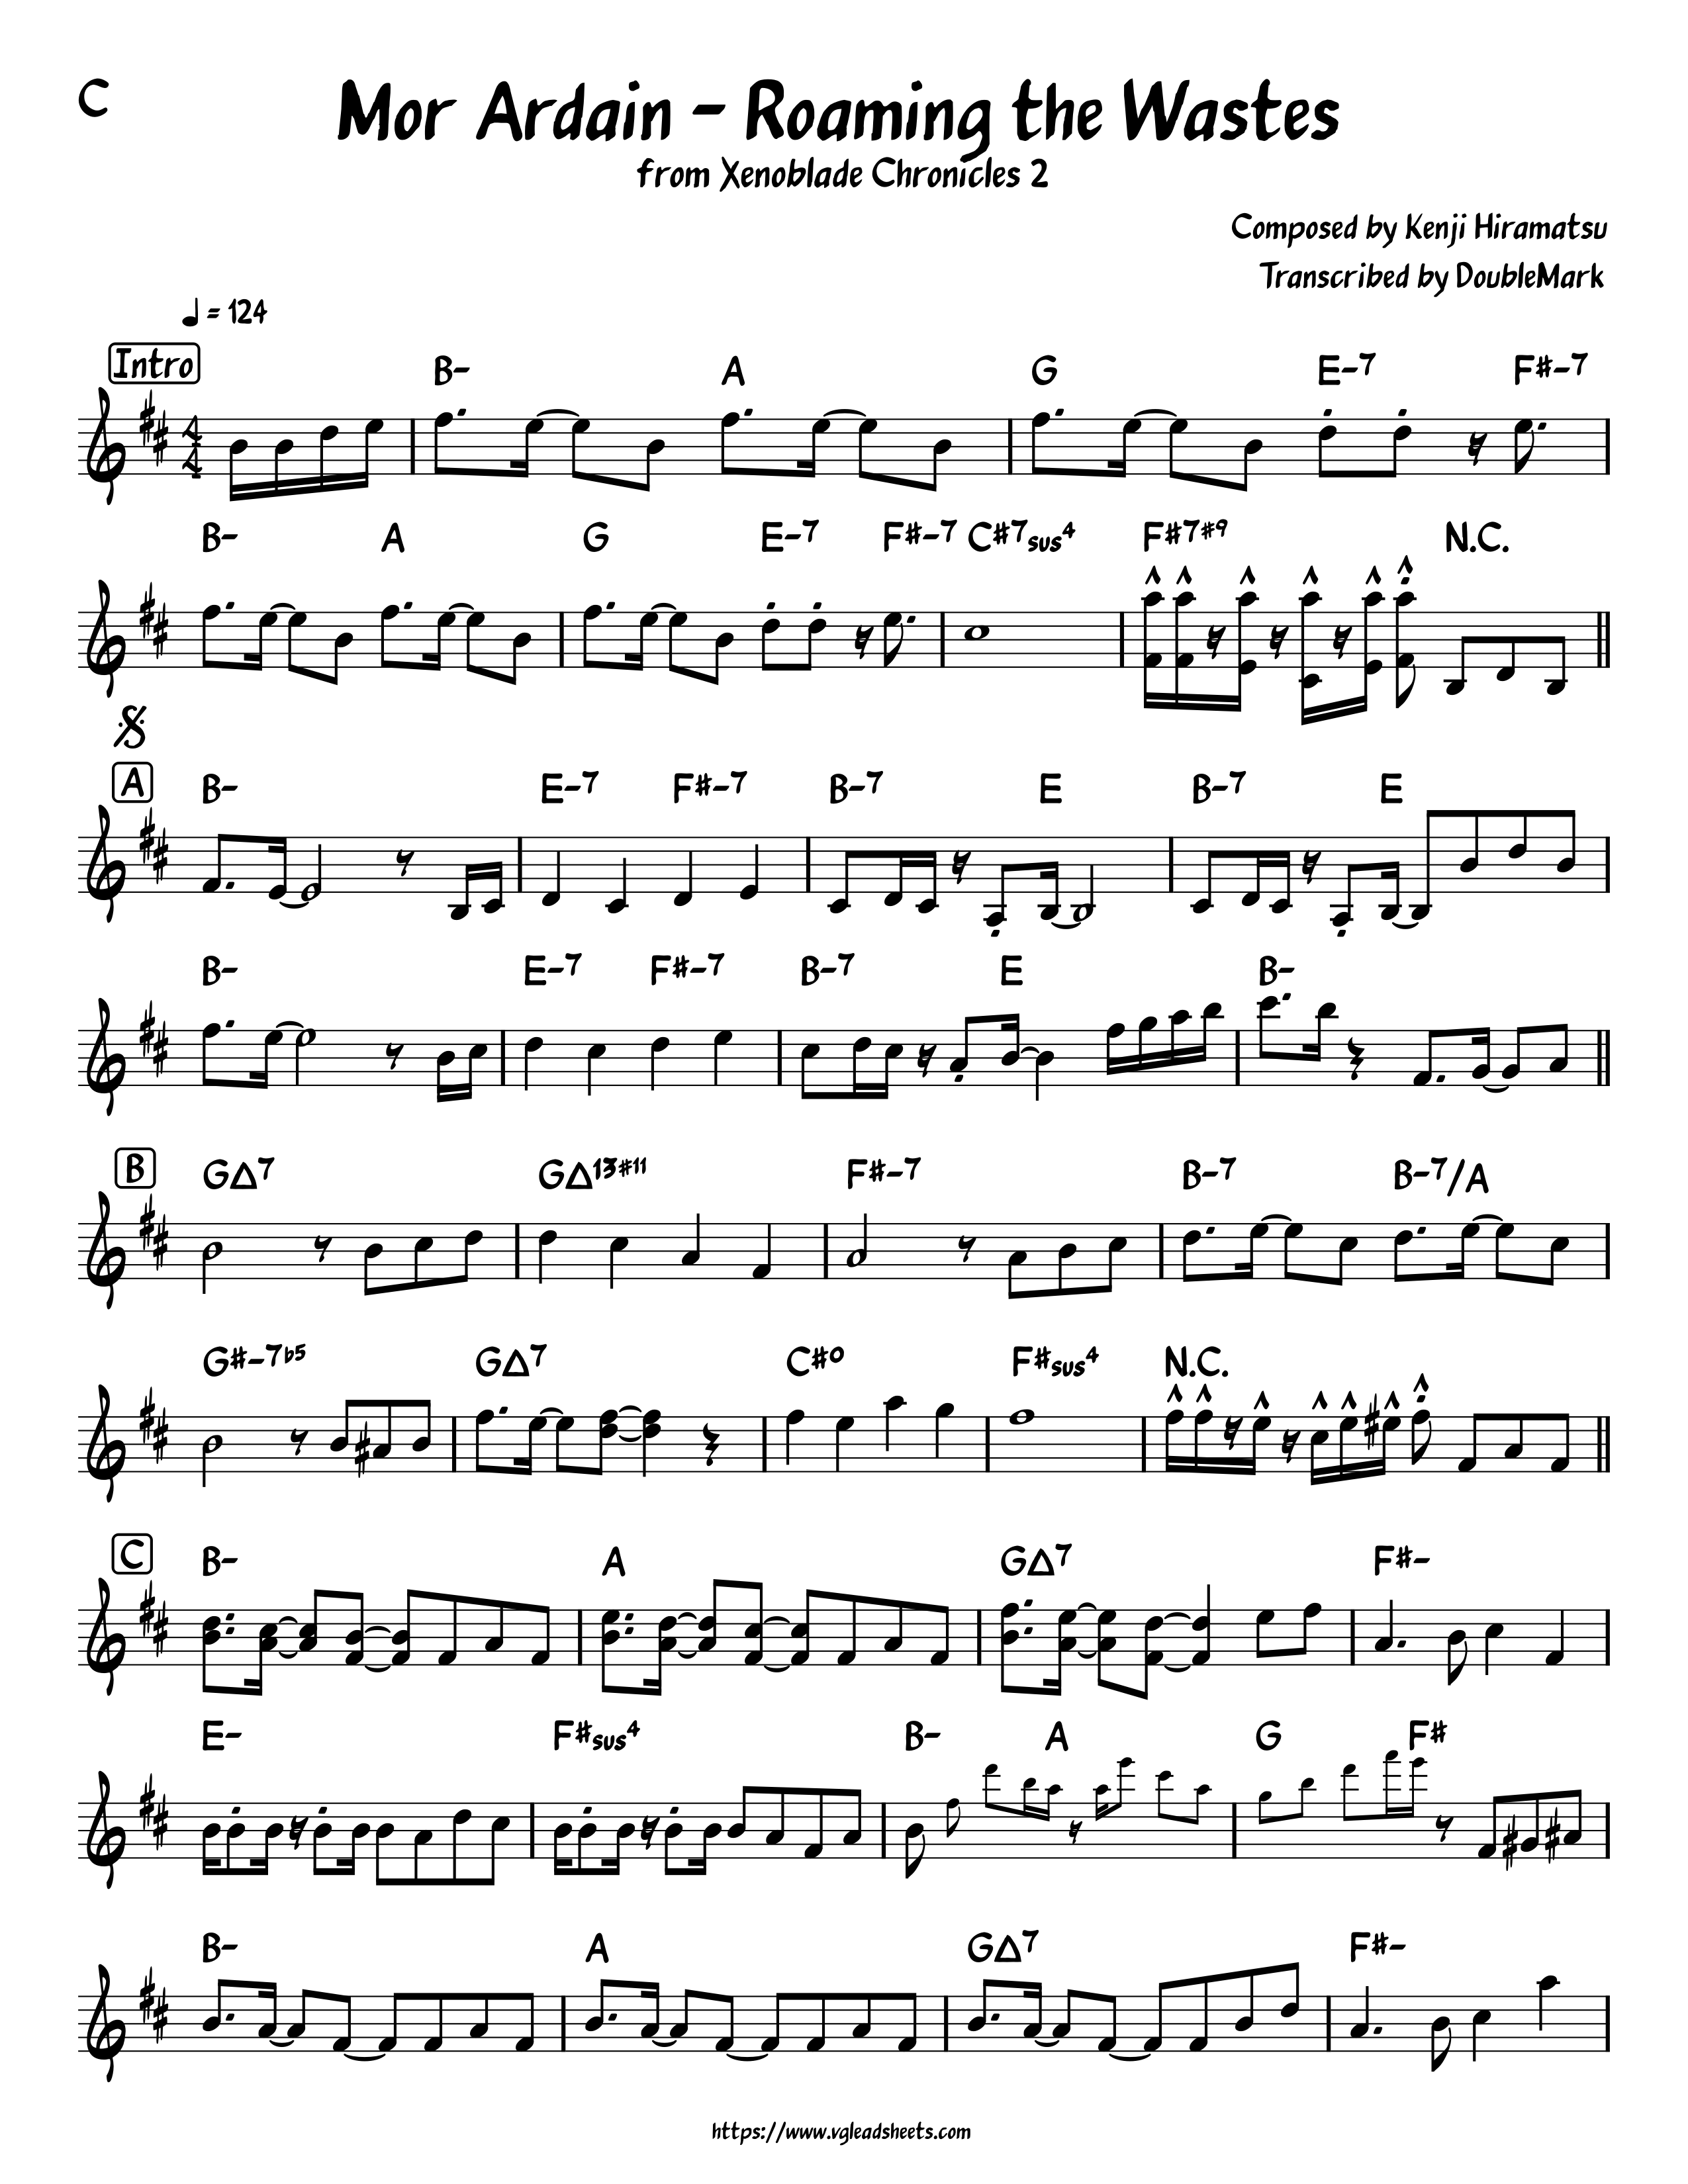 Sonic The Hedgehog 2 - Boss Theme Sheet music for Piano (Solo), musica do  sonic no teclado 